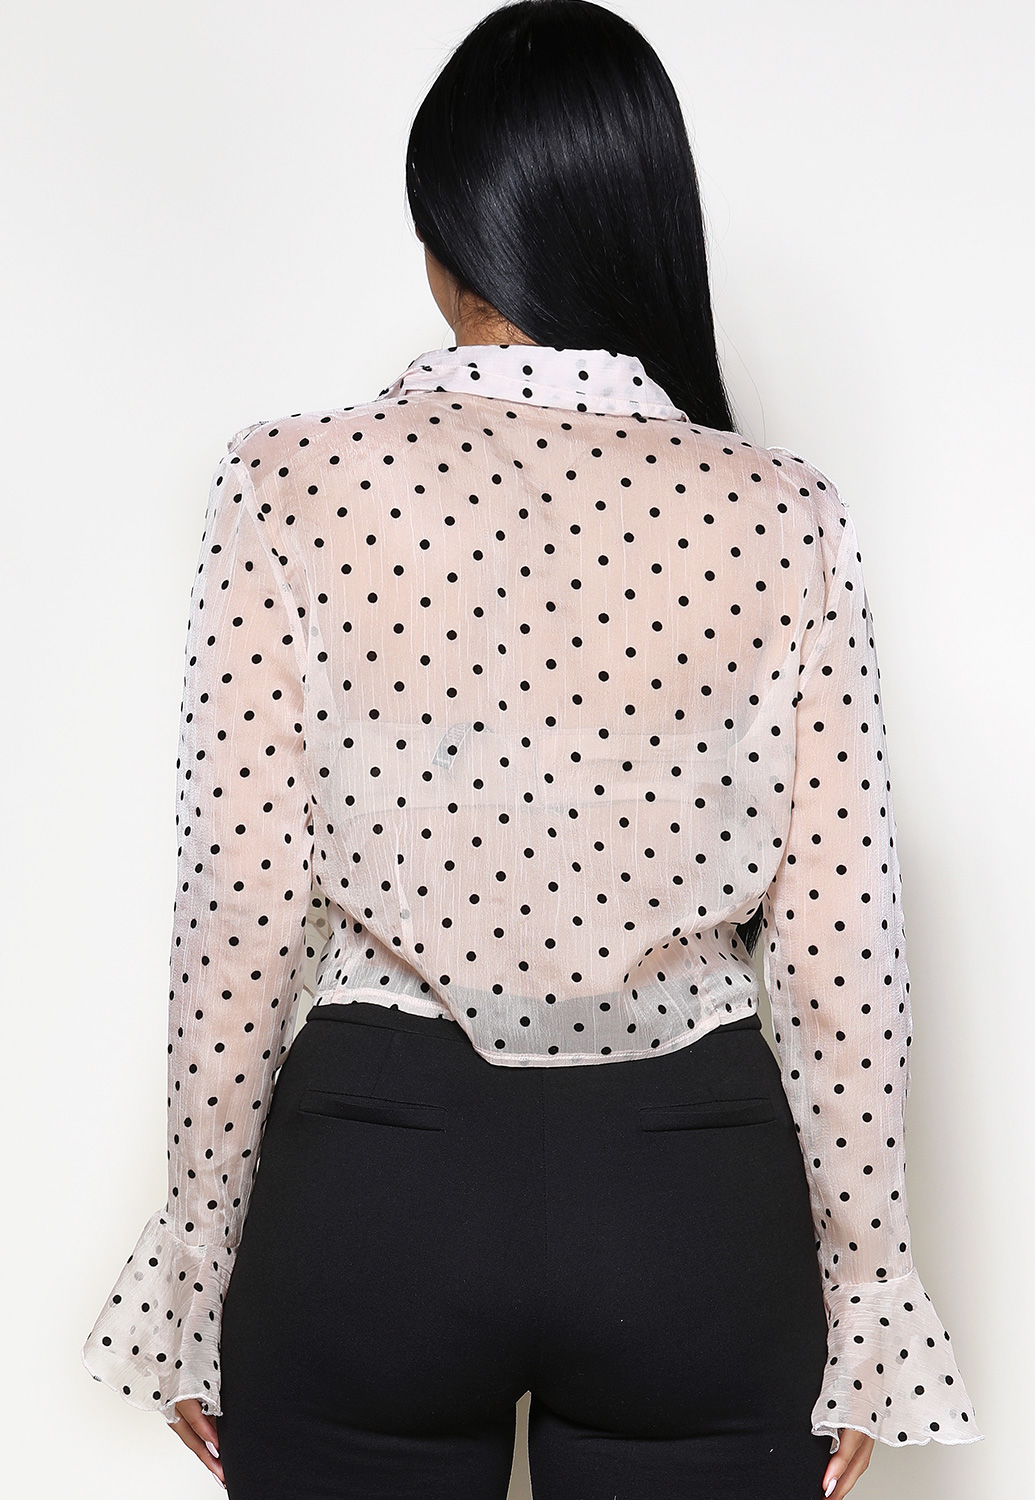 Sheer Polka Dot Print Dressy Top